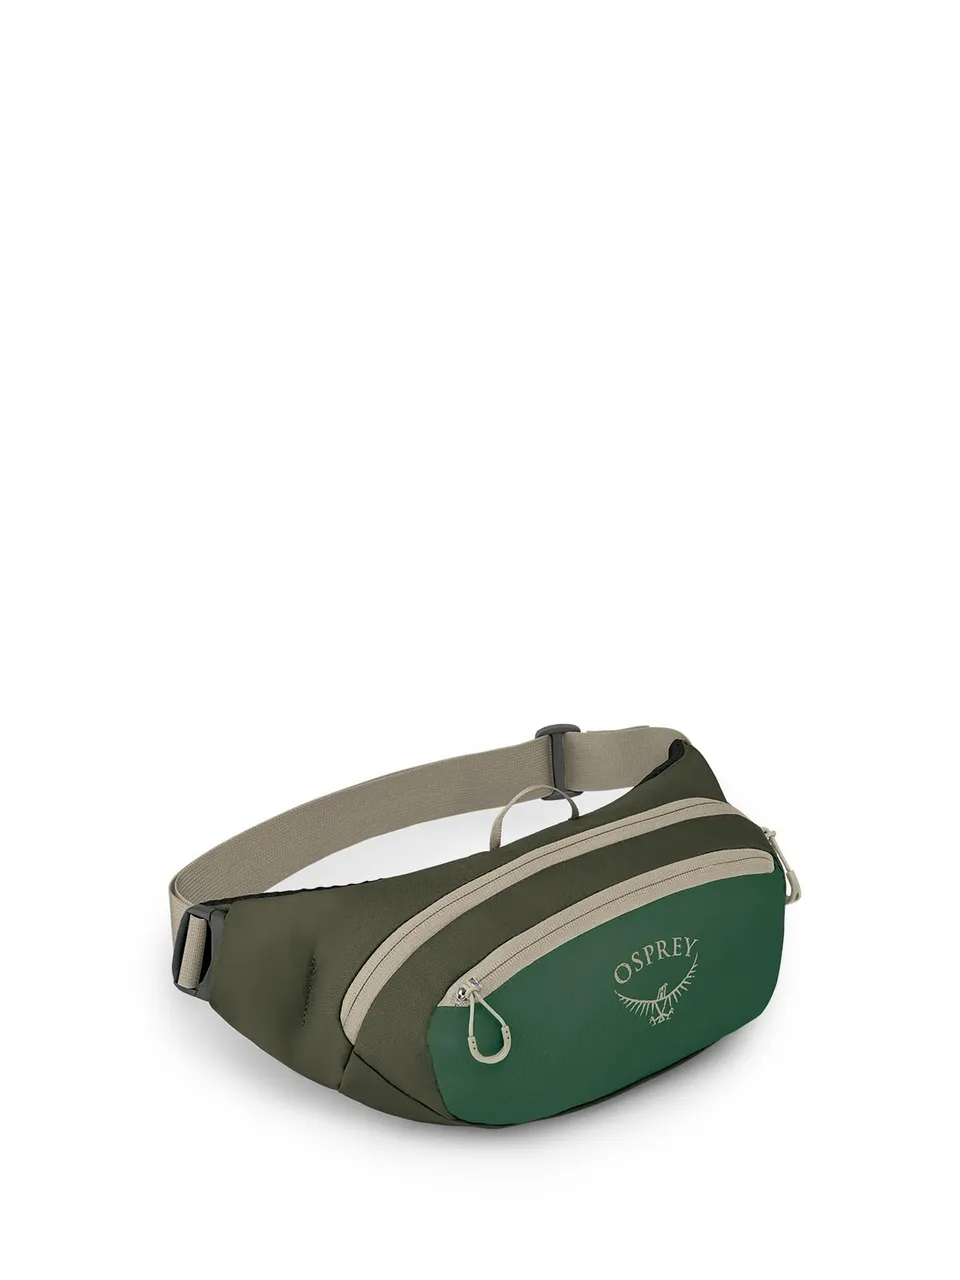 Osprey Unisex-Adult Daylite Waist Bag